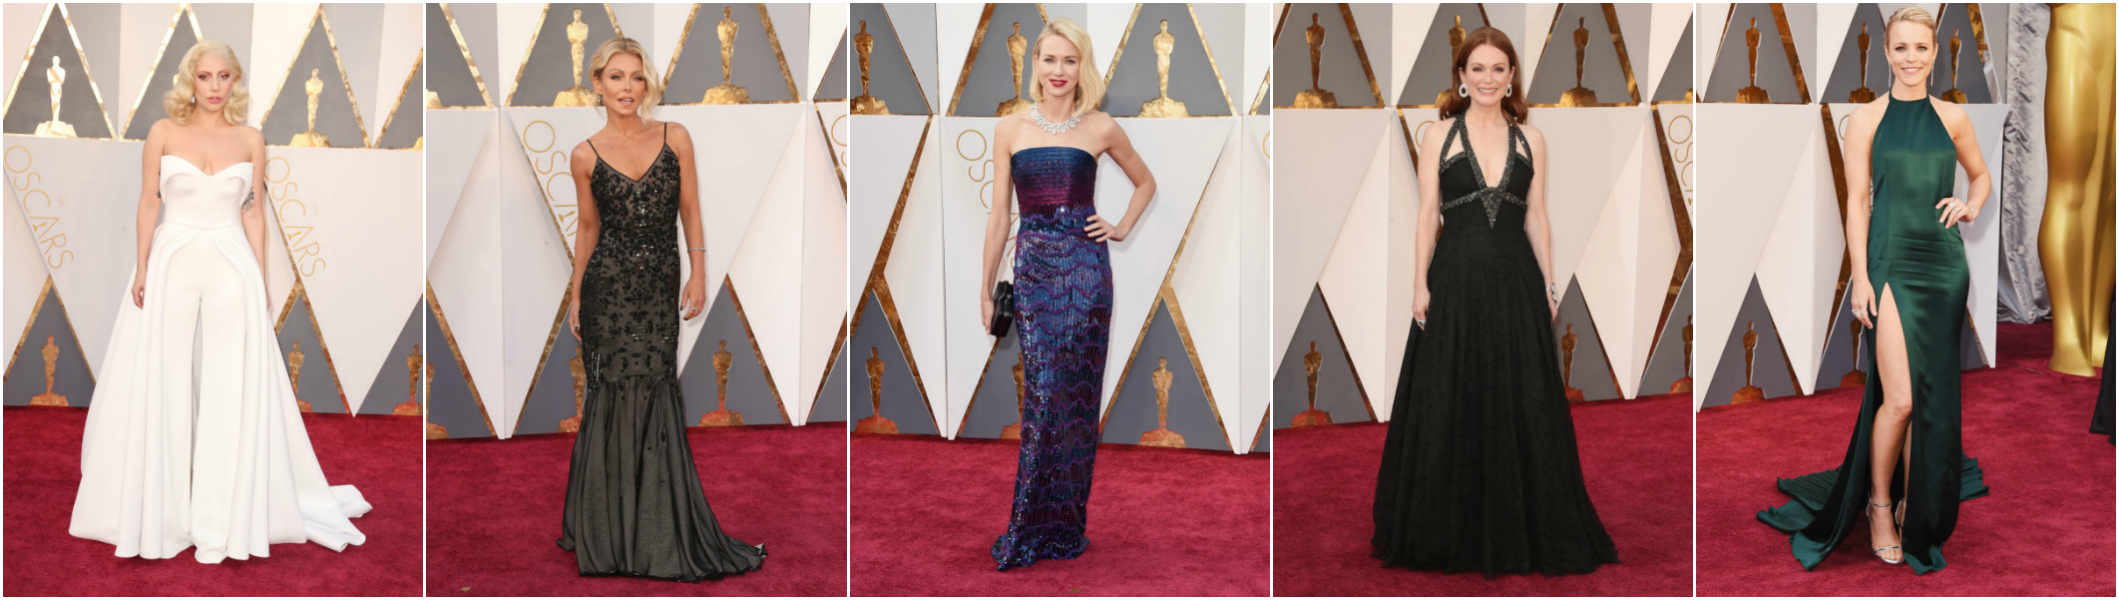 Oscars Red Carpet Celebrities 2016